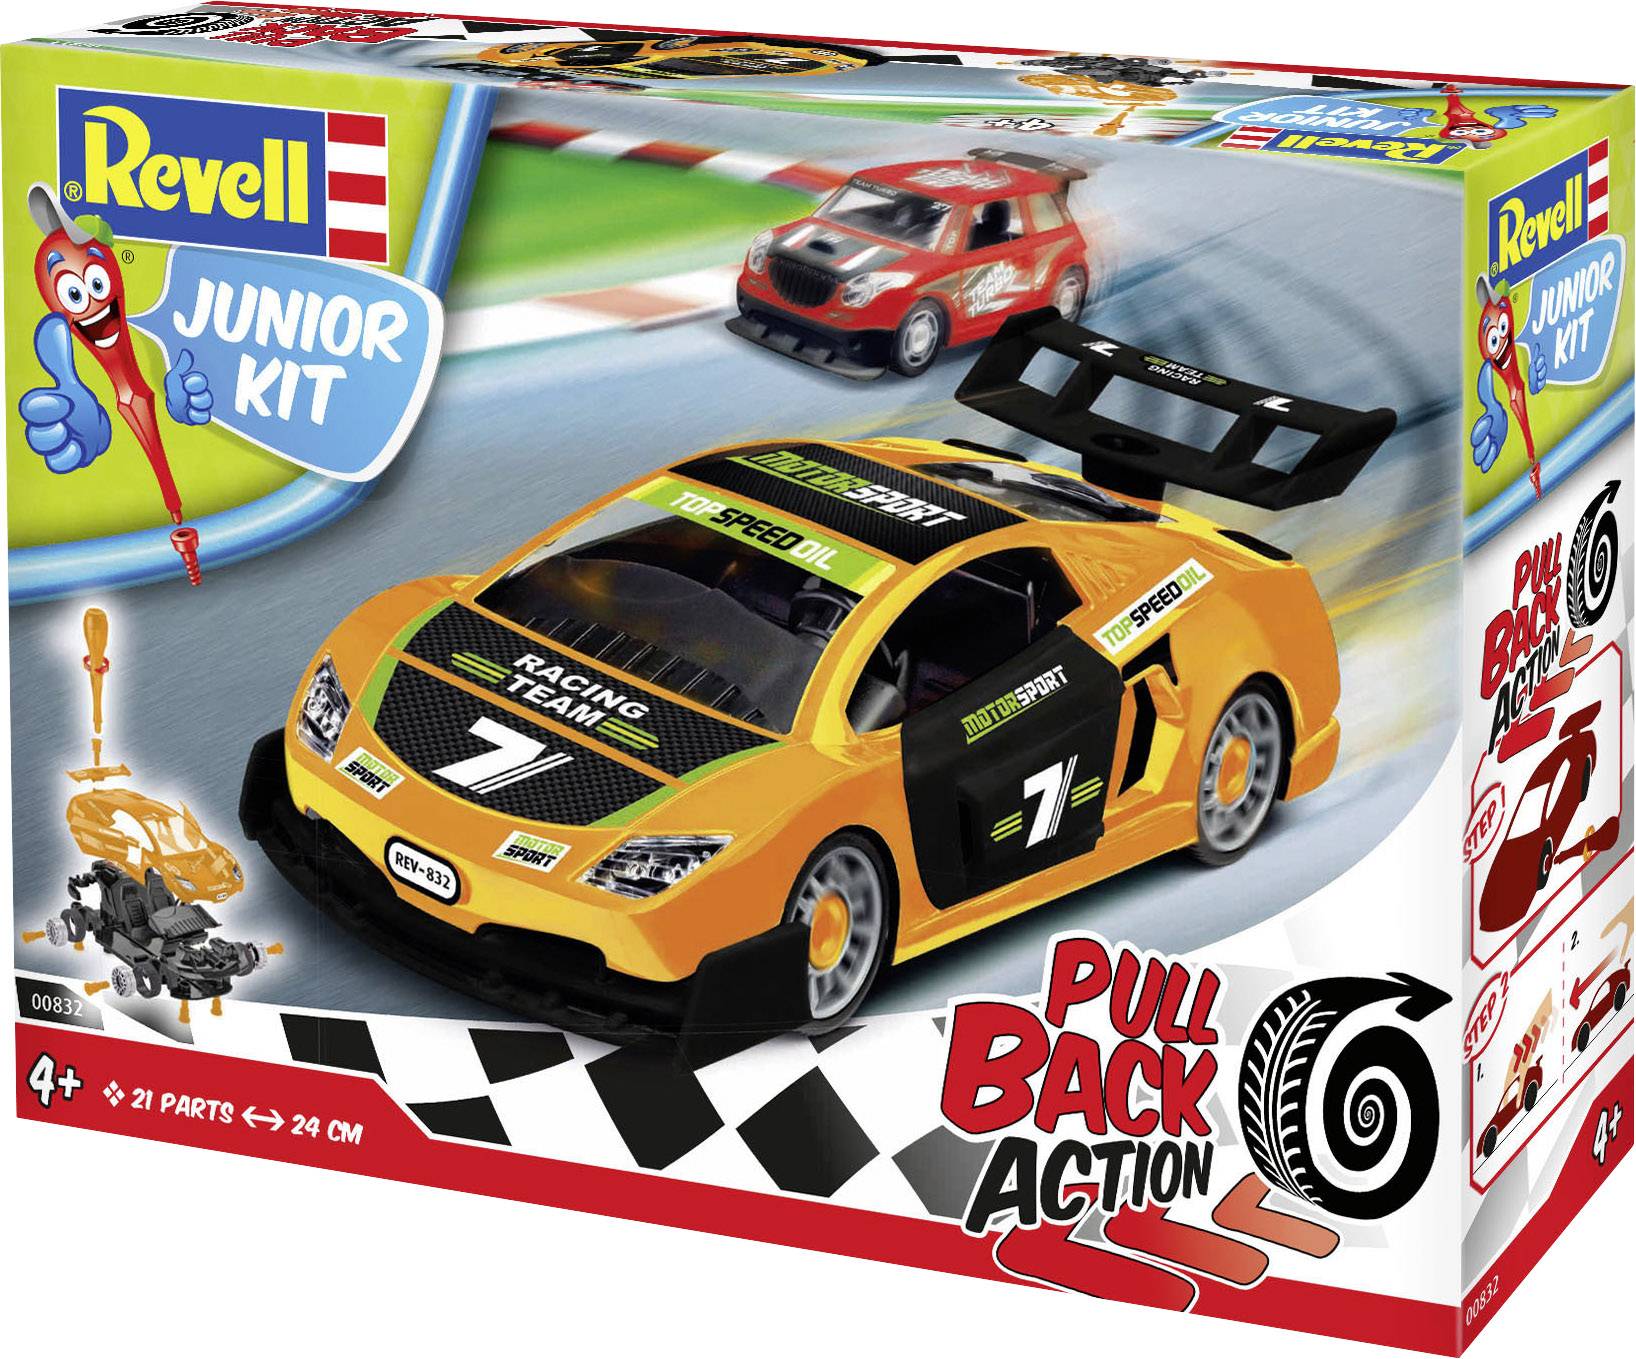 Revell 00809 Junior Kit Racing Car Toy 